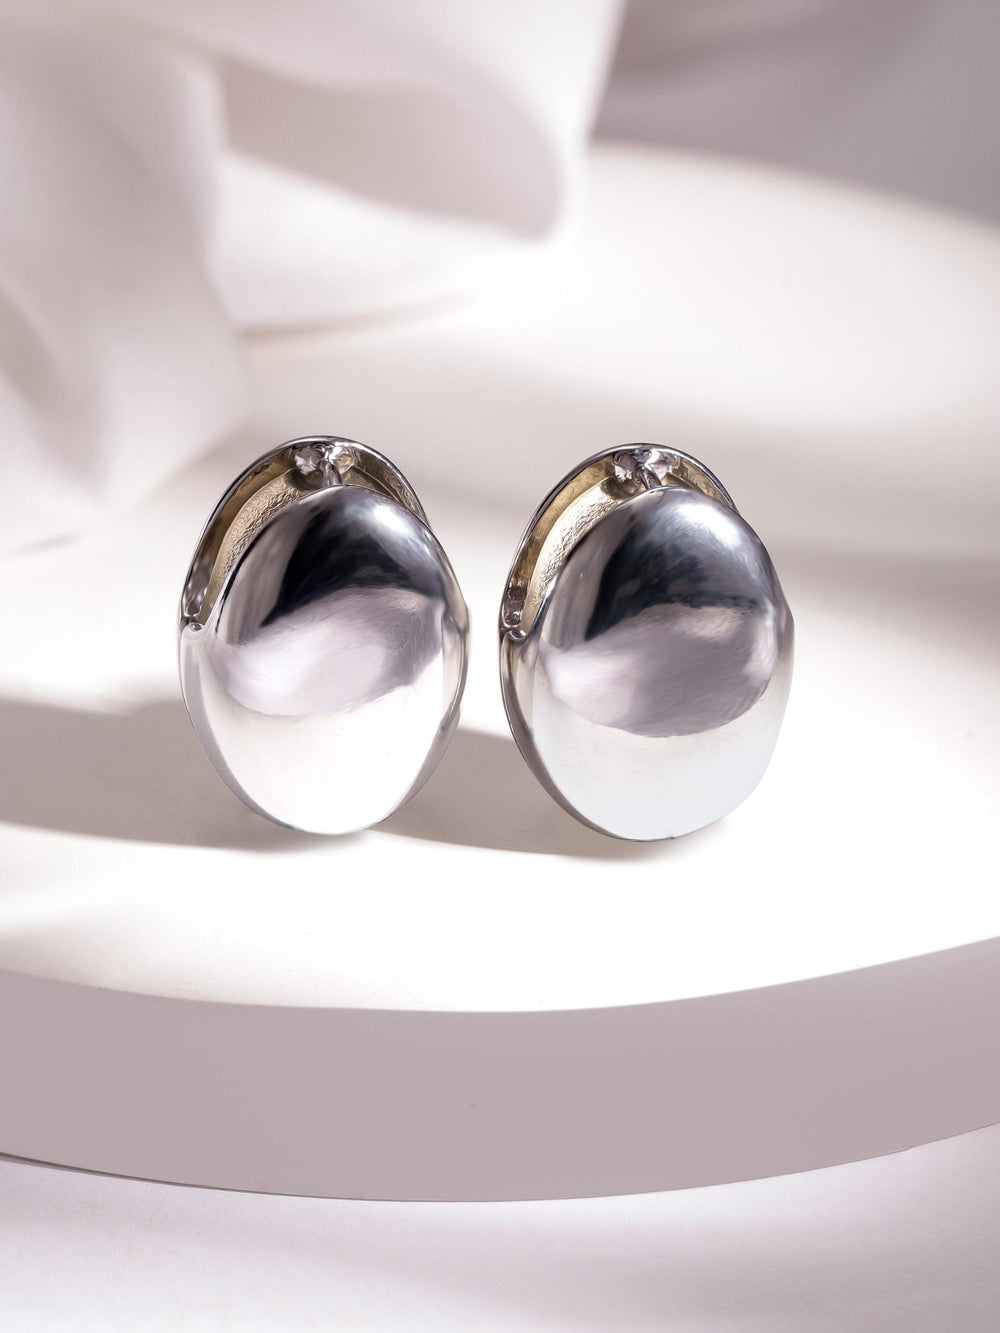 Rubans Voguish Silver-Plated Oval Studs Earrings Earrings